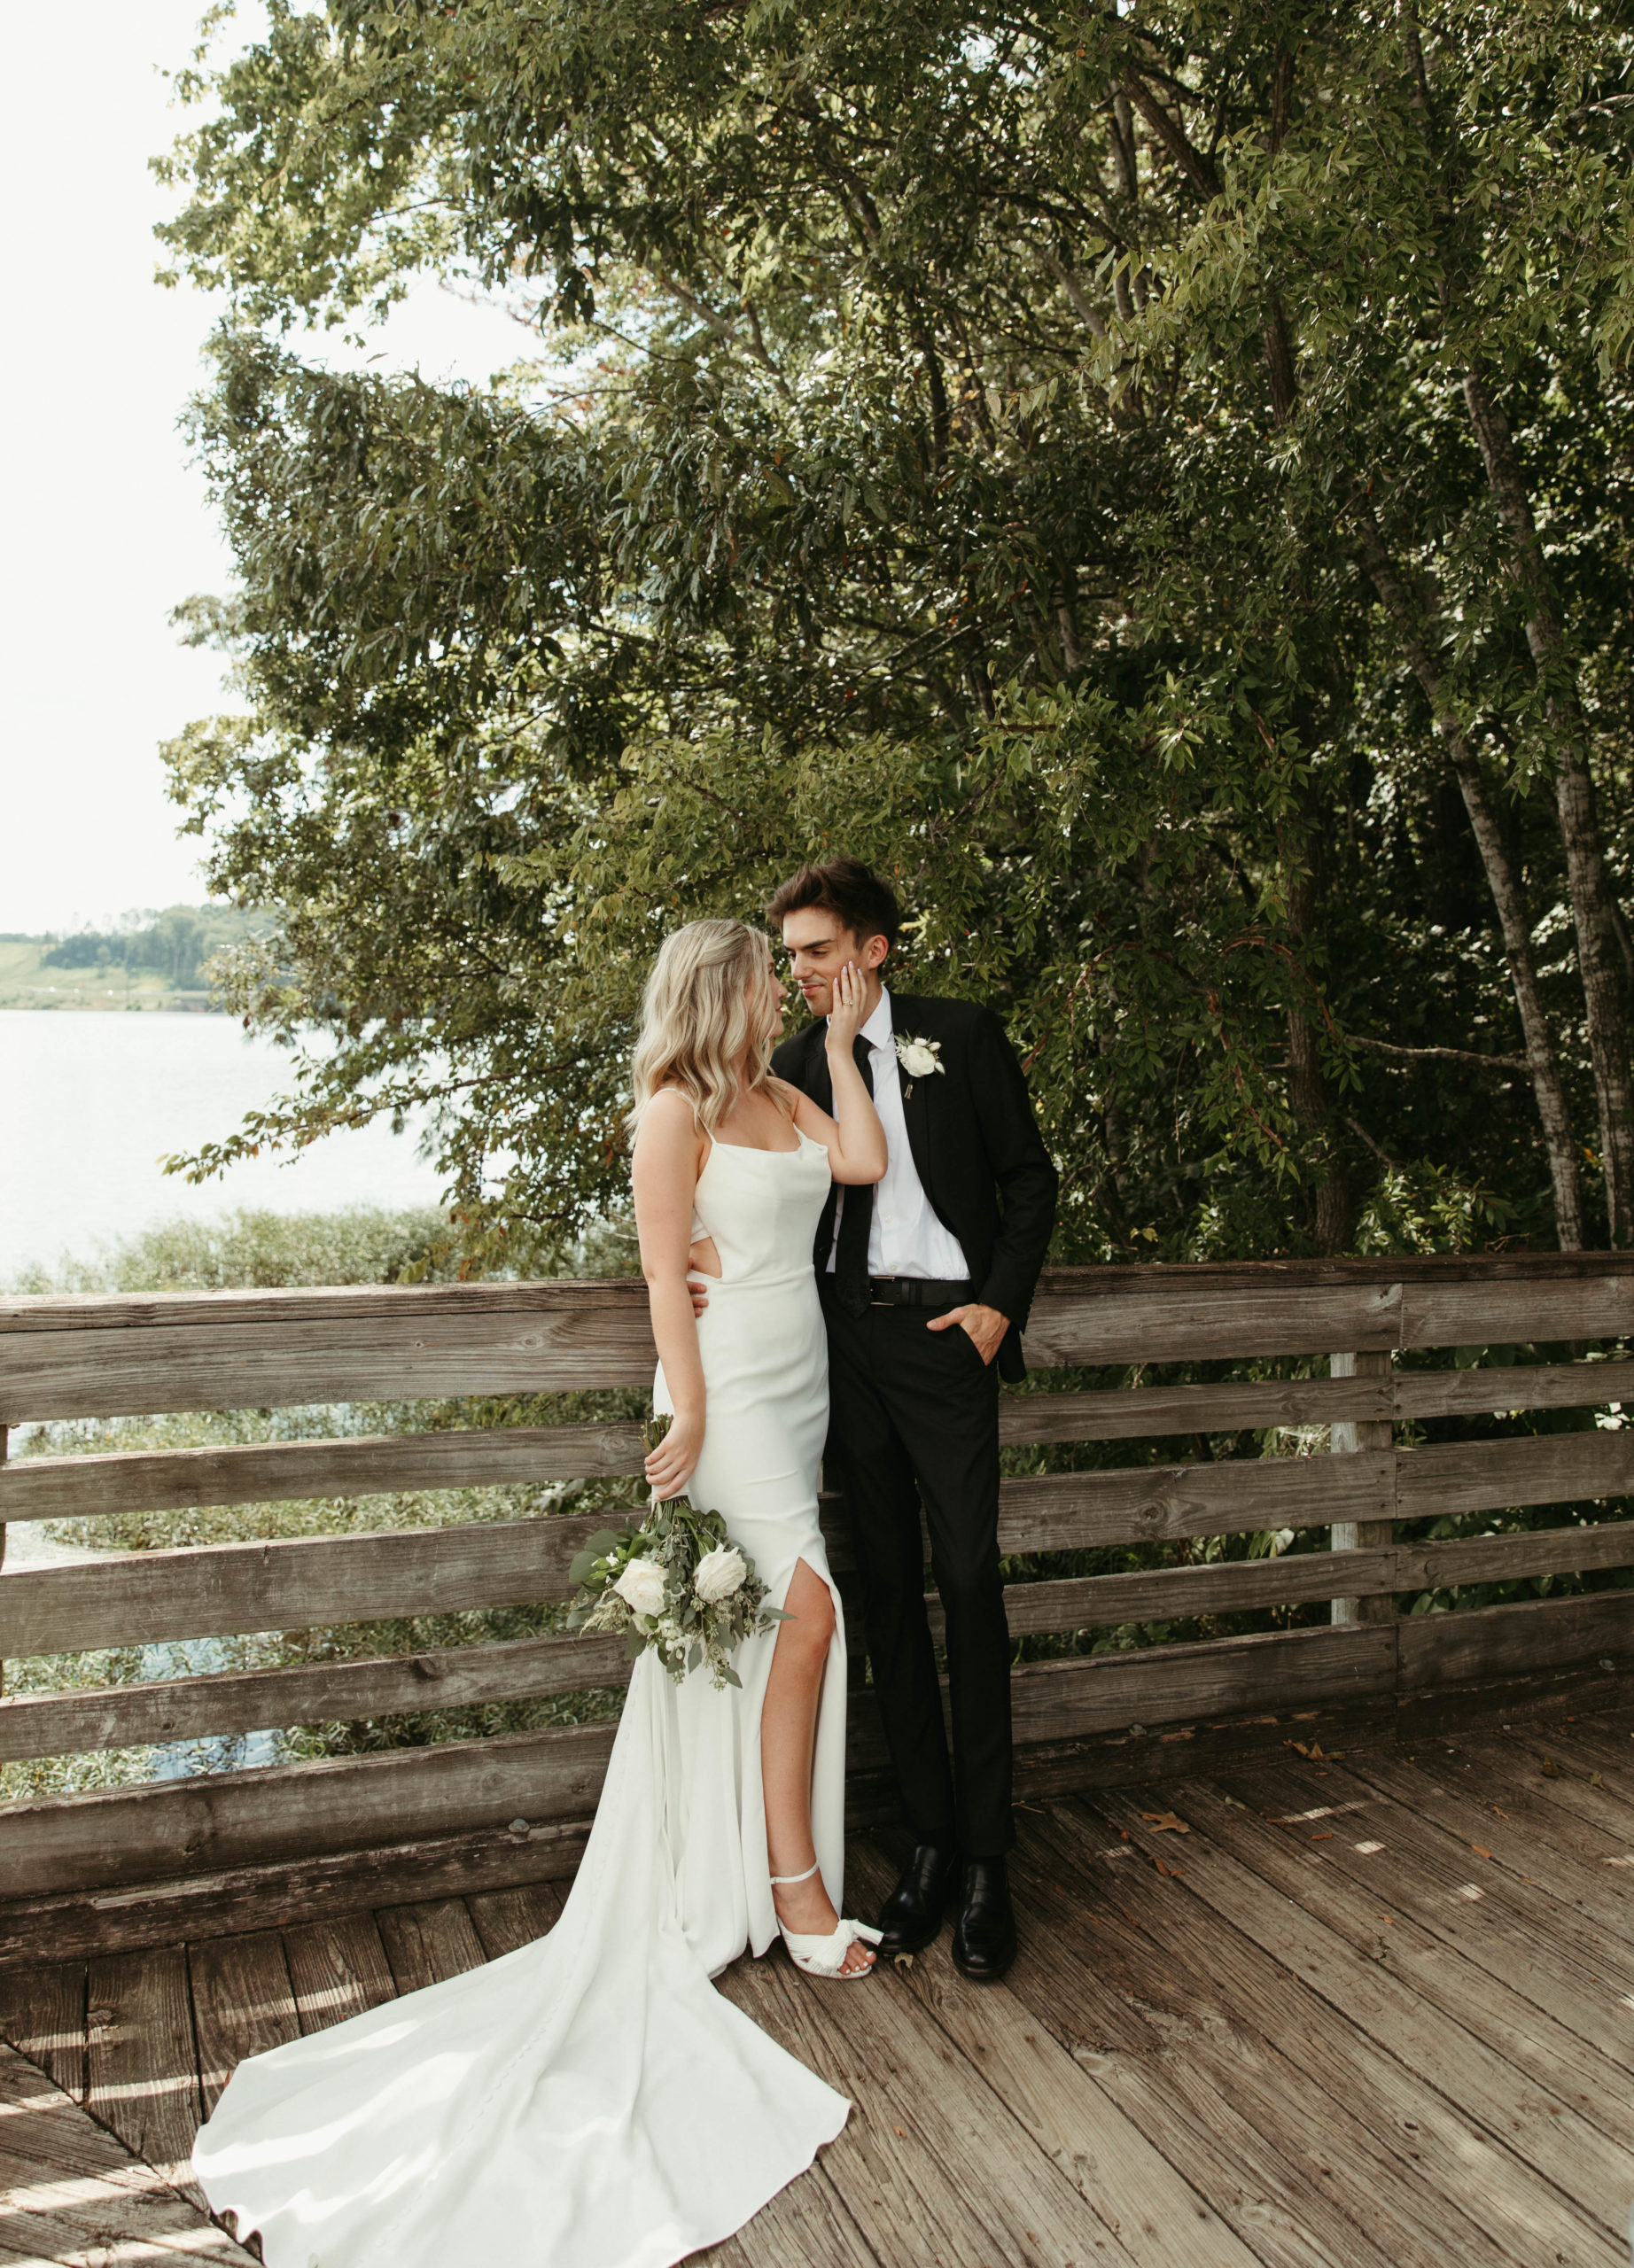 Georgia based destination wedding and elopement photographer captures beautiful summer wedding in north Georgia.